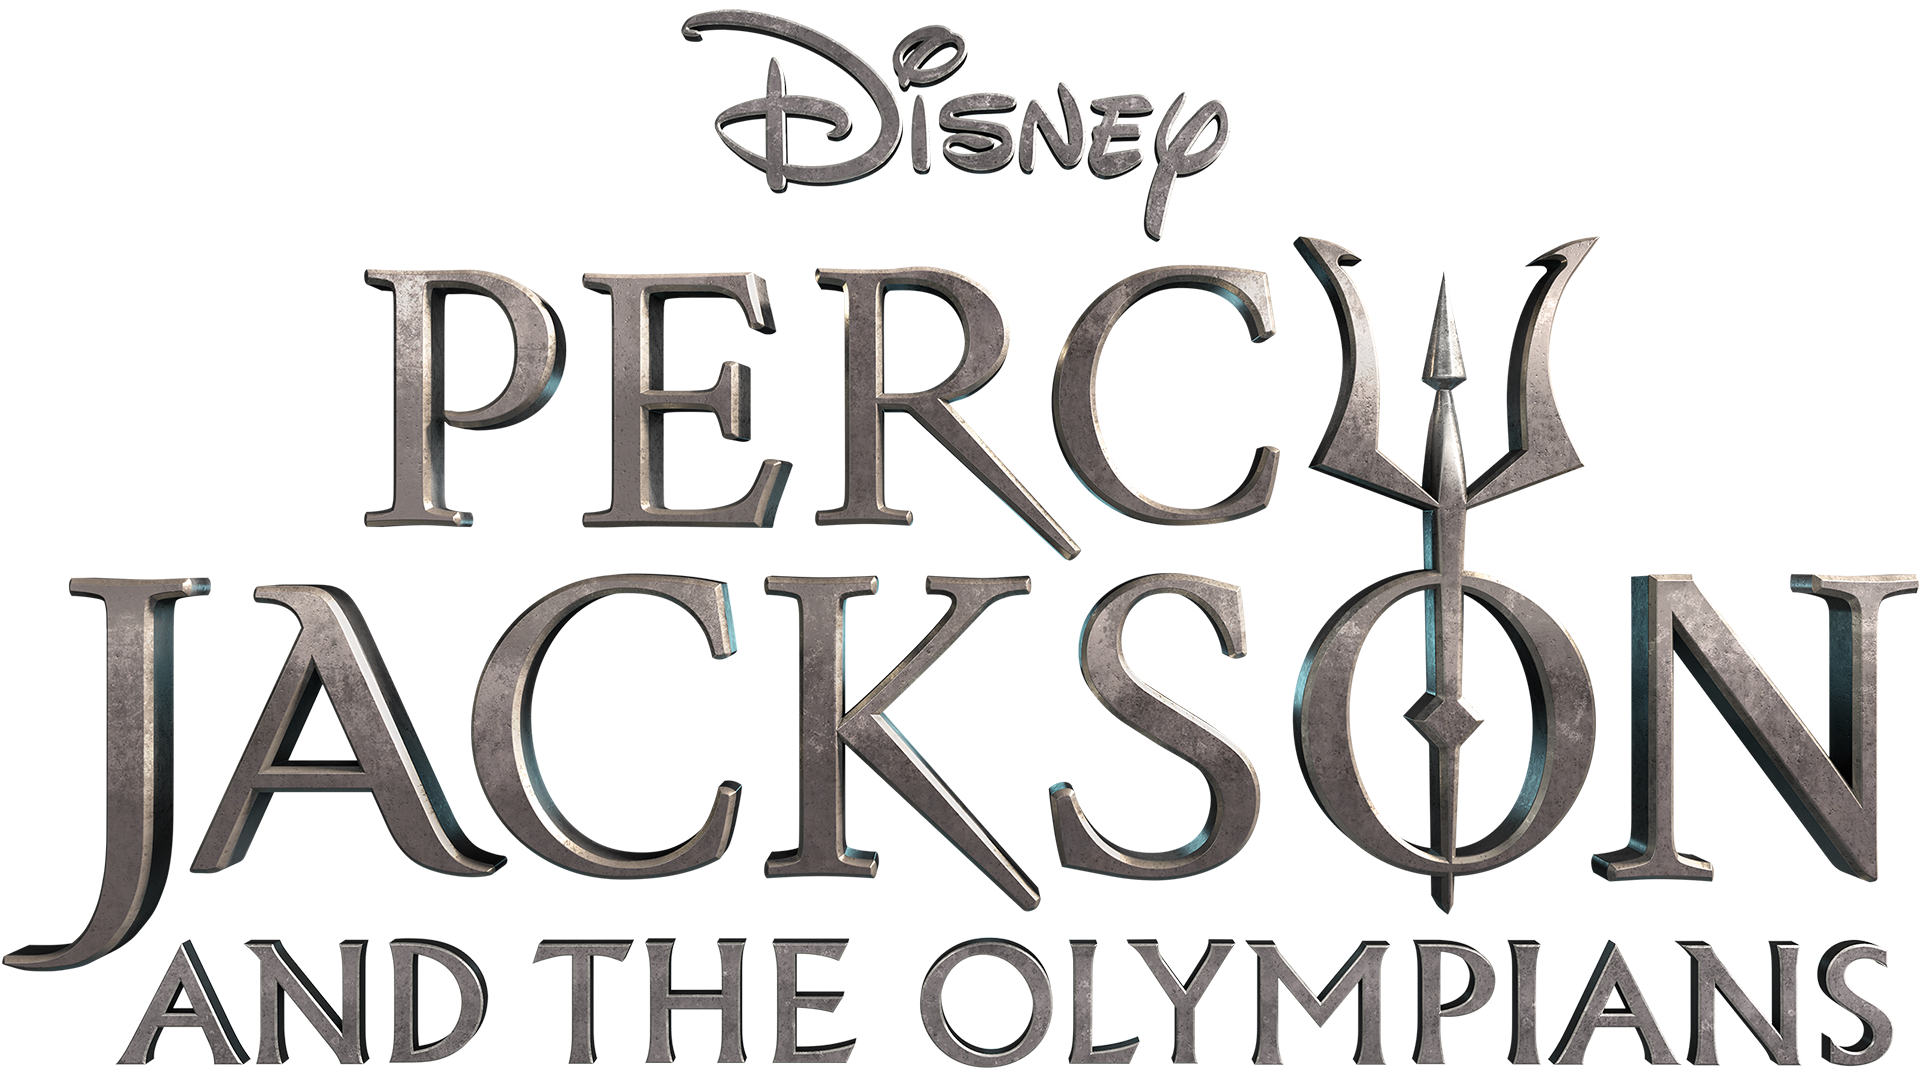 Lance Reddick & Toby Stephens Secretly Joined the 'Percy Jackson